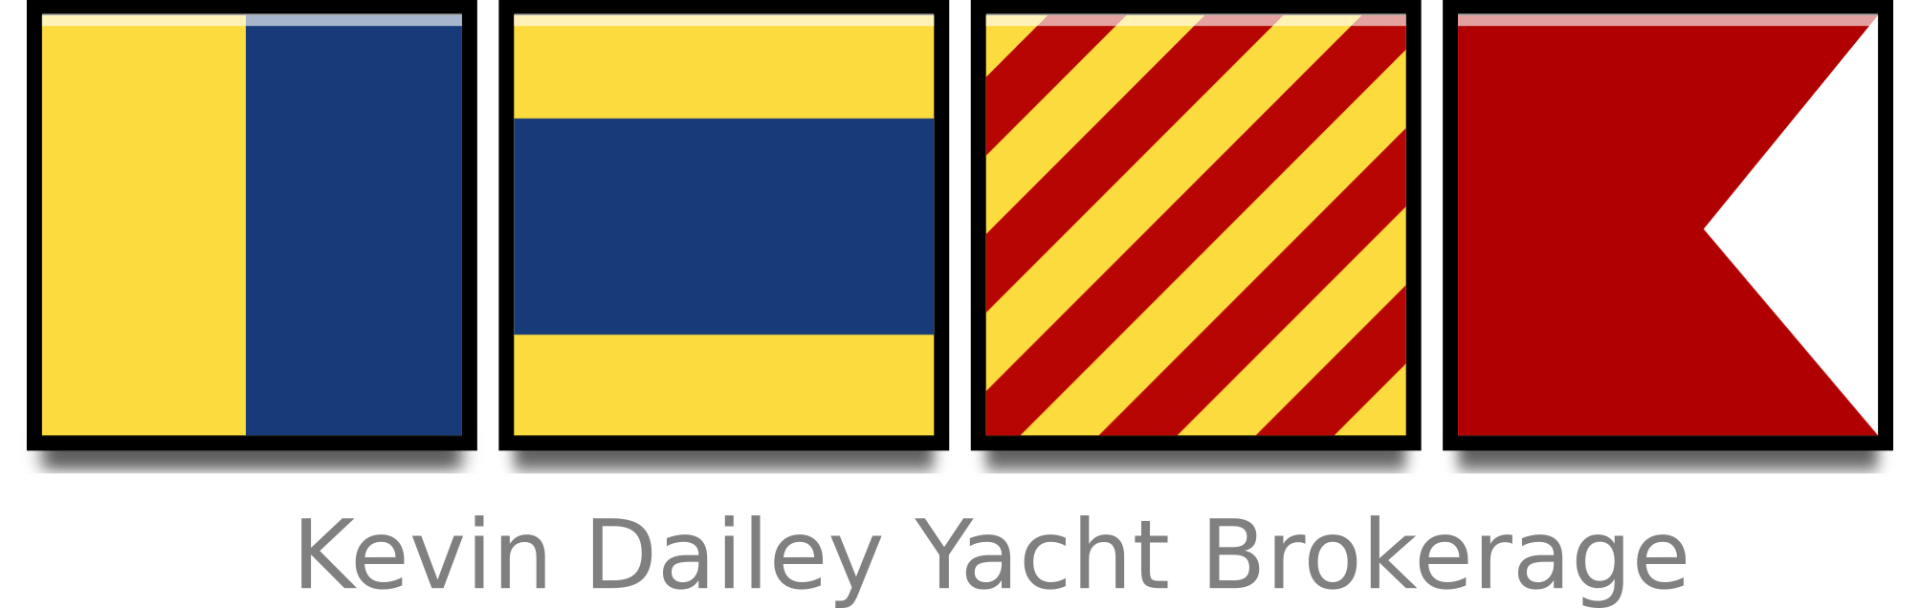 Kevin Dailey Yacht Brokerage logo